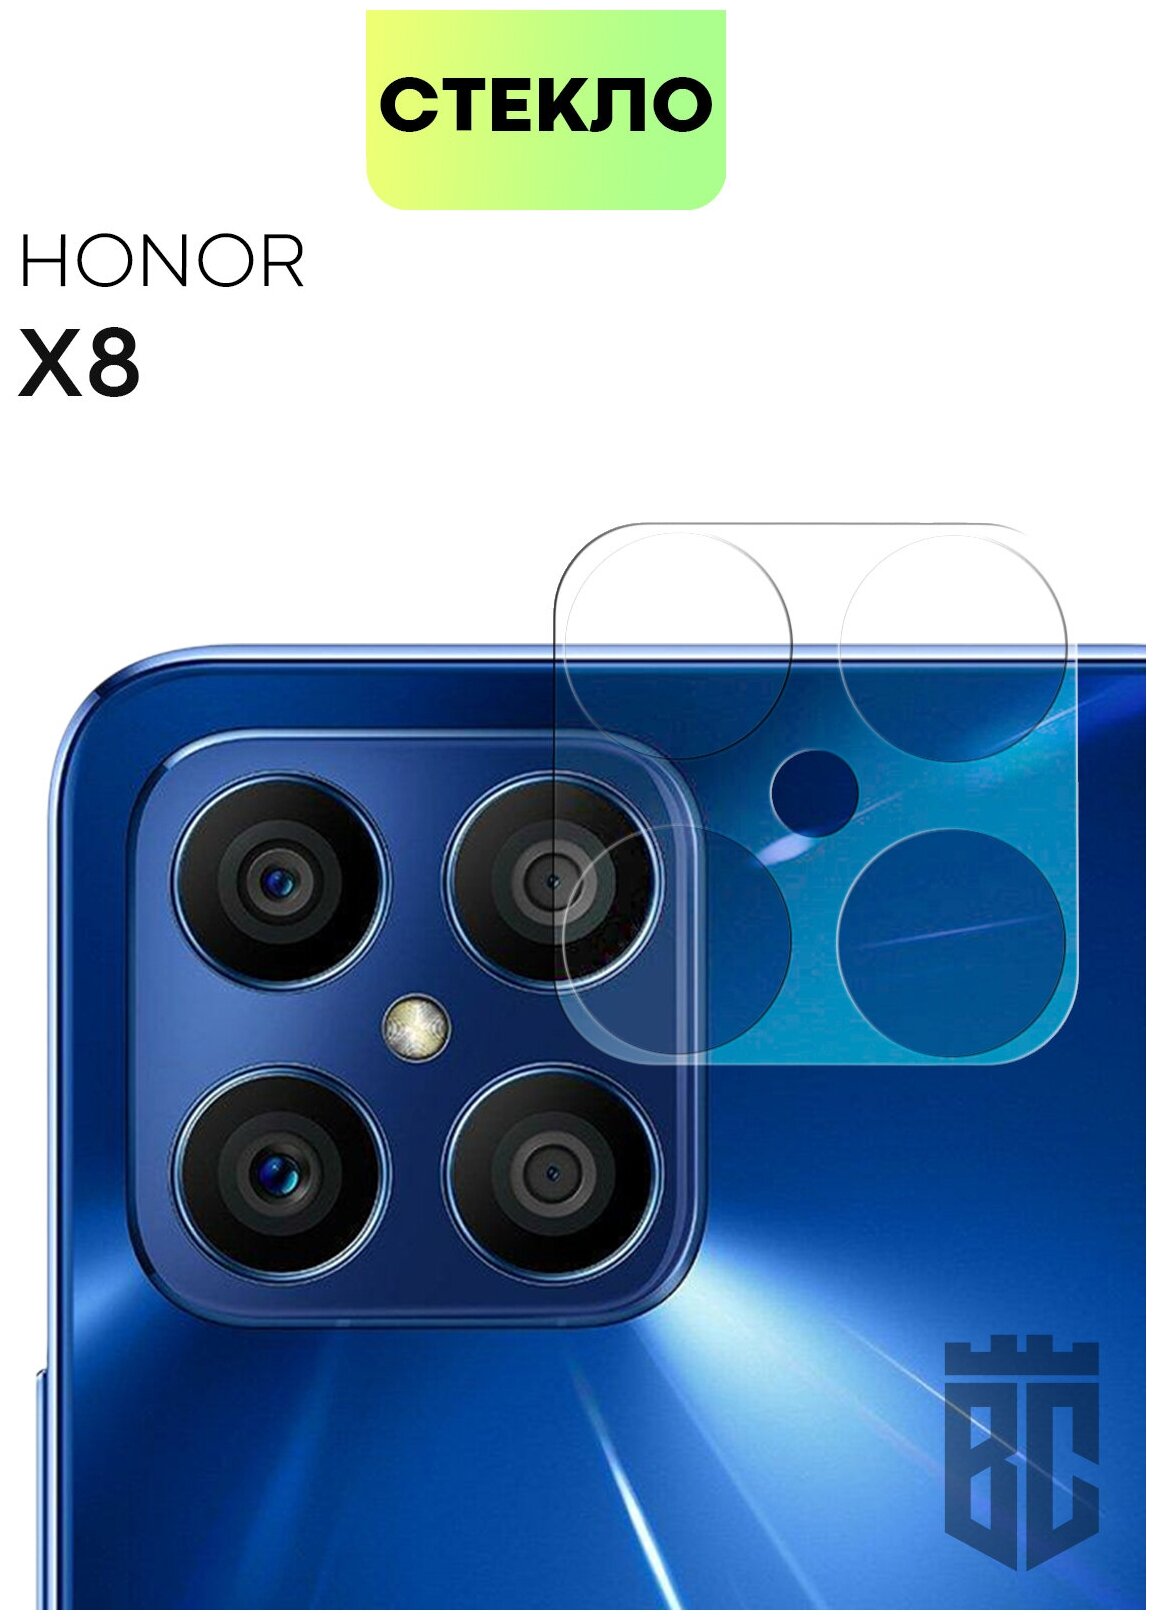 Стекло на камеру телефона Honor X8 (Хонор Икс 8 Х8) защитное стекло для защиты модуля камер смартфона прозрачное